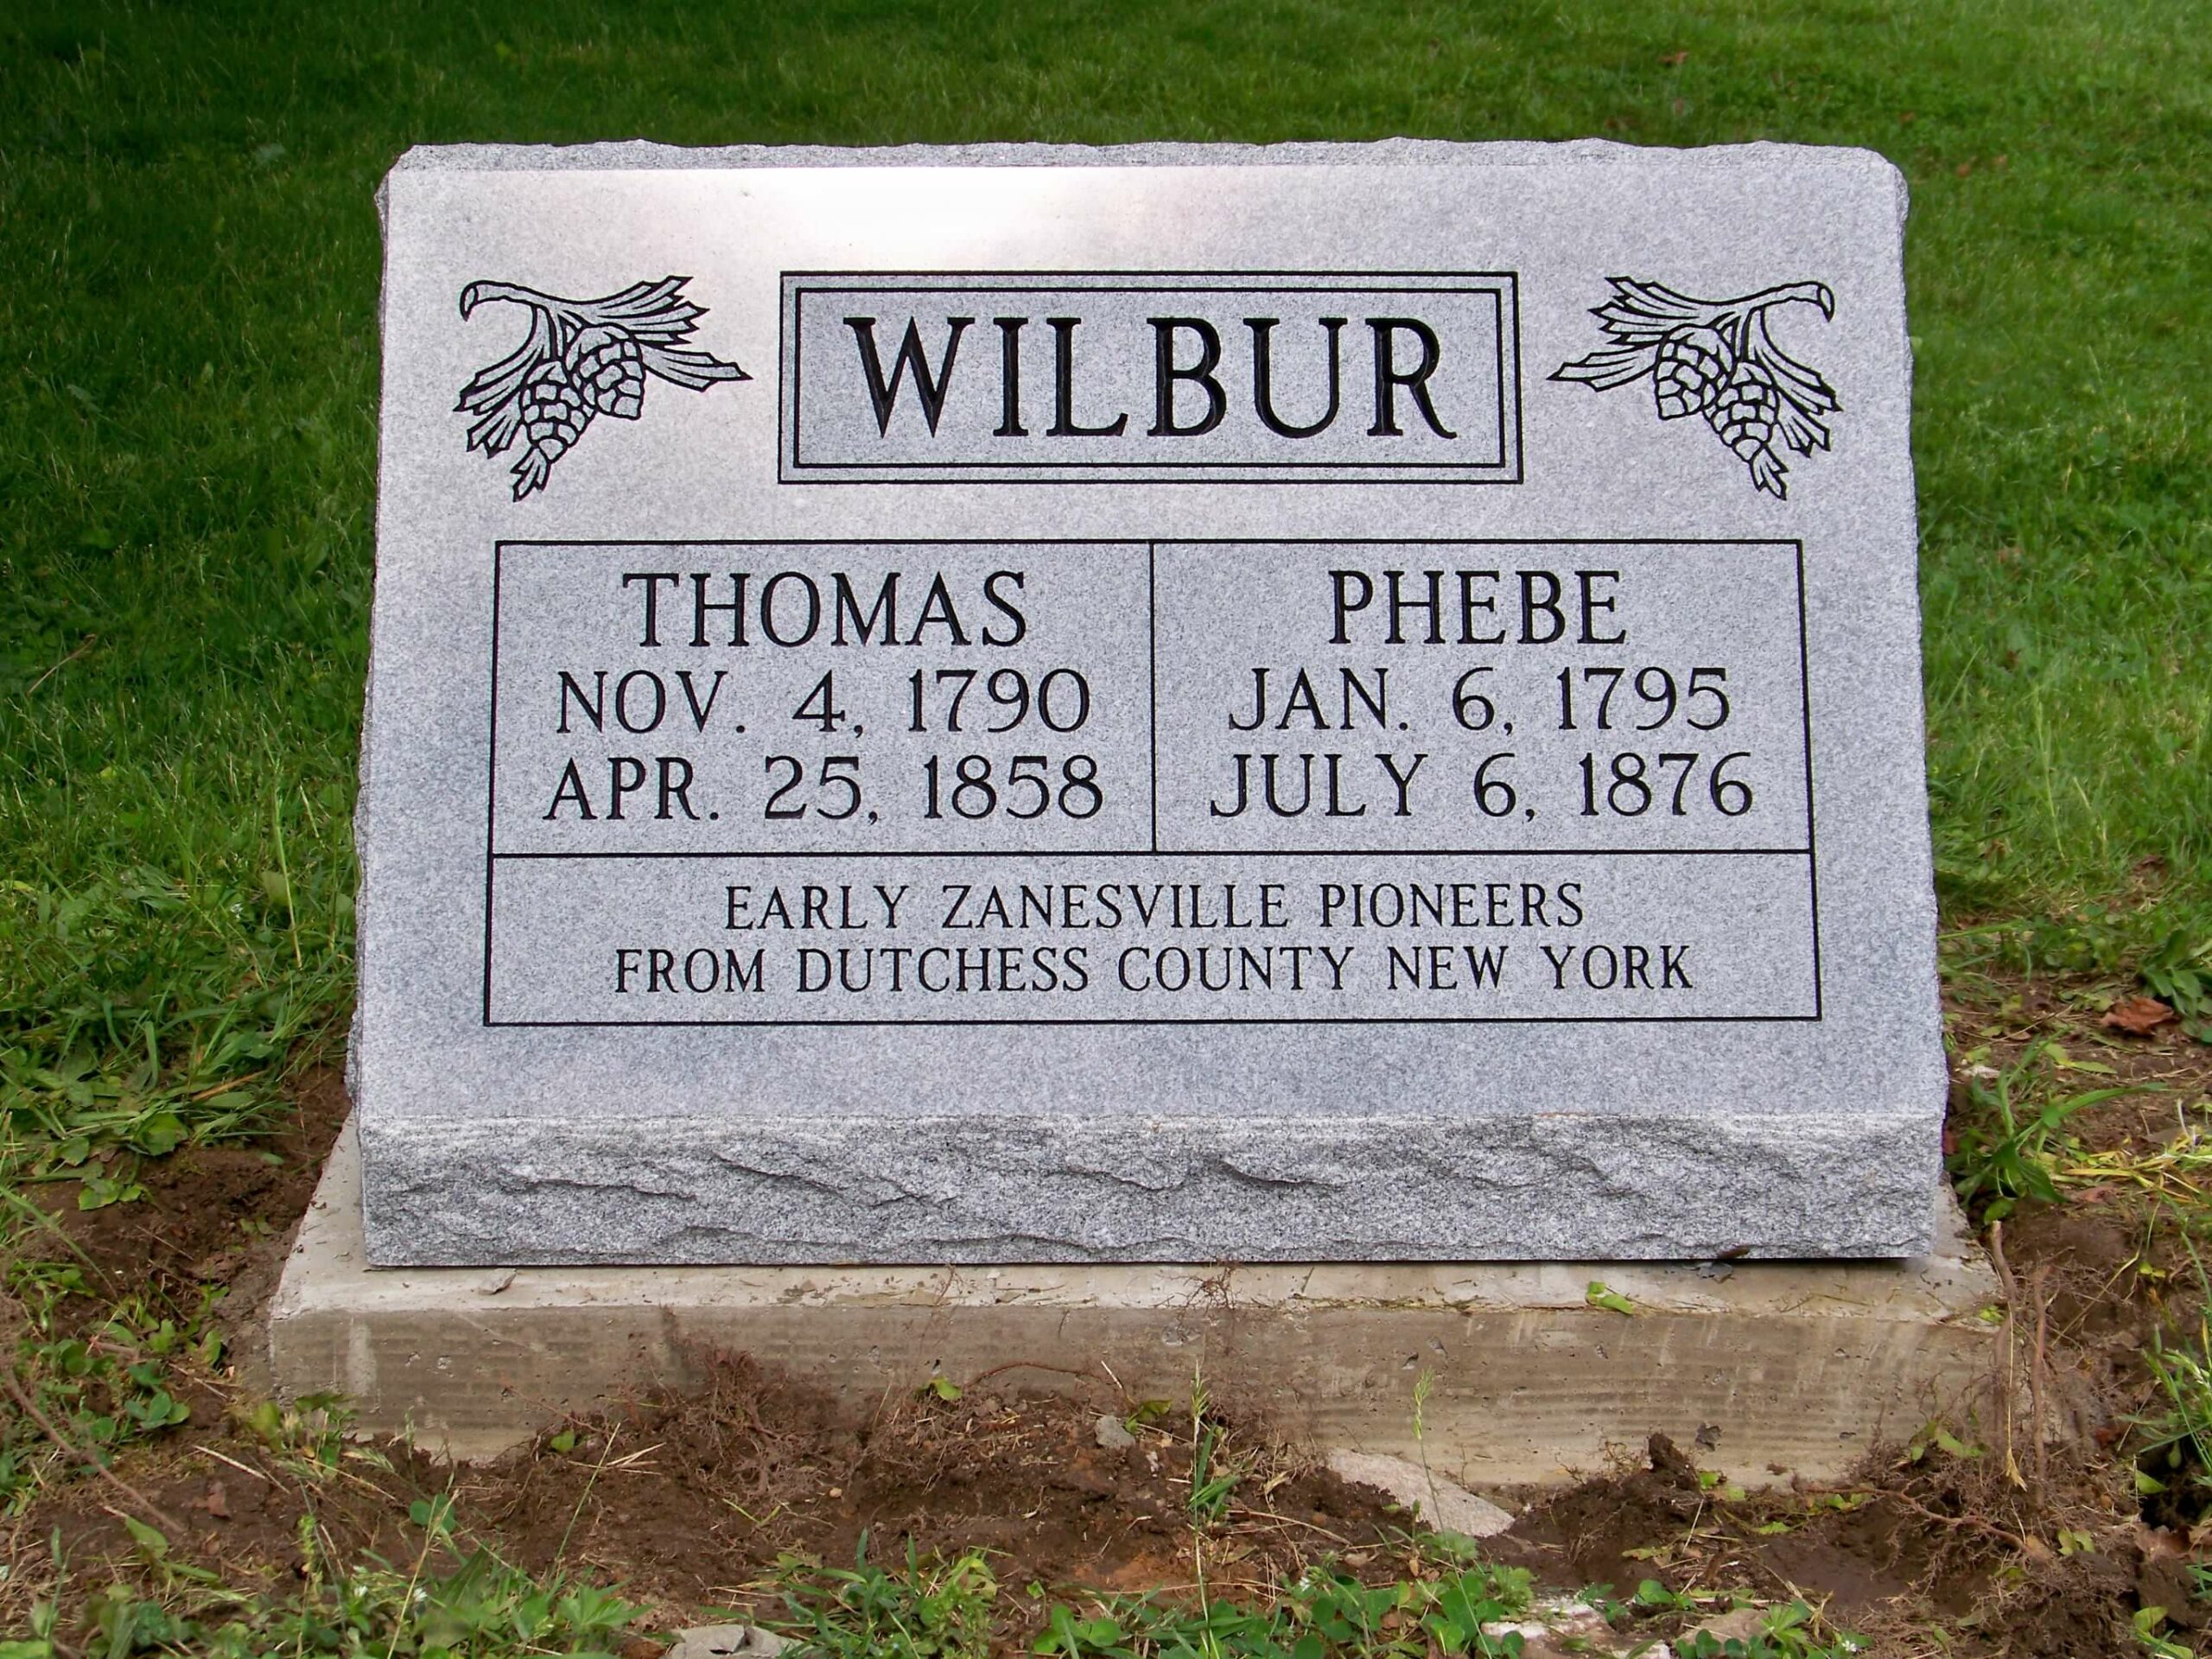 Wilbur, Thomas